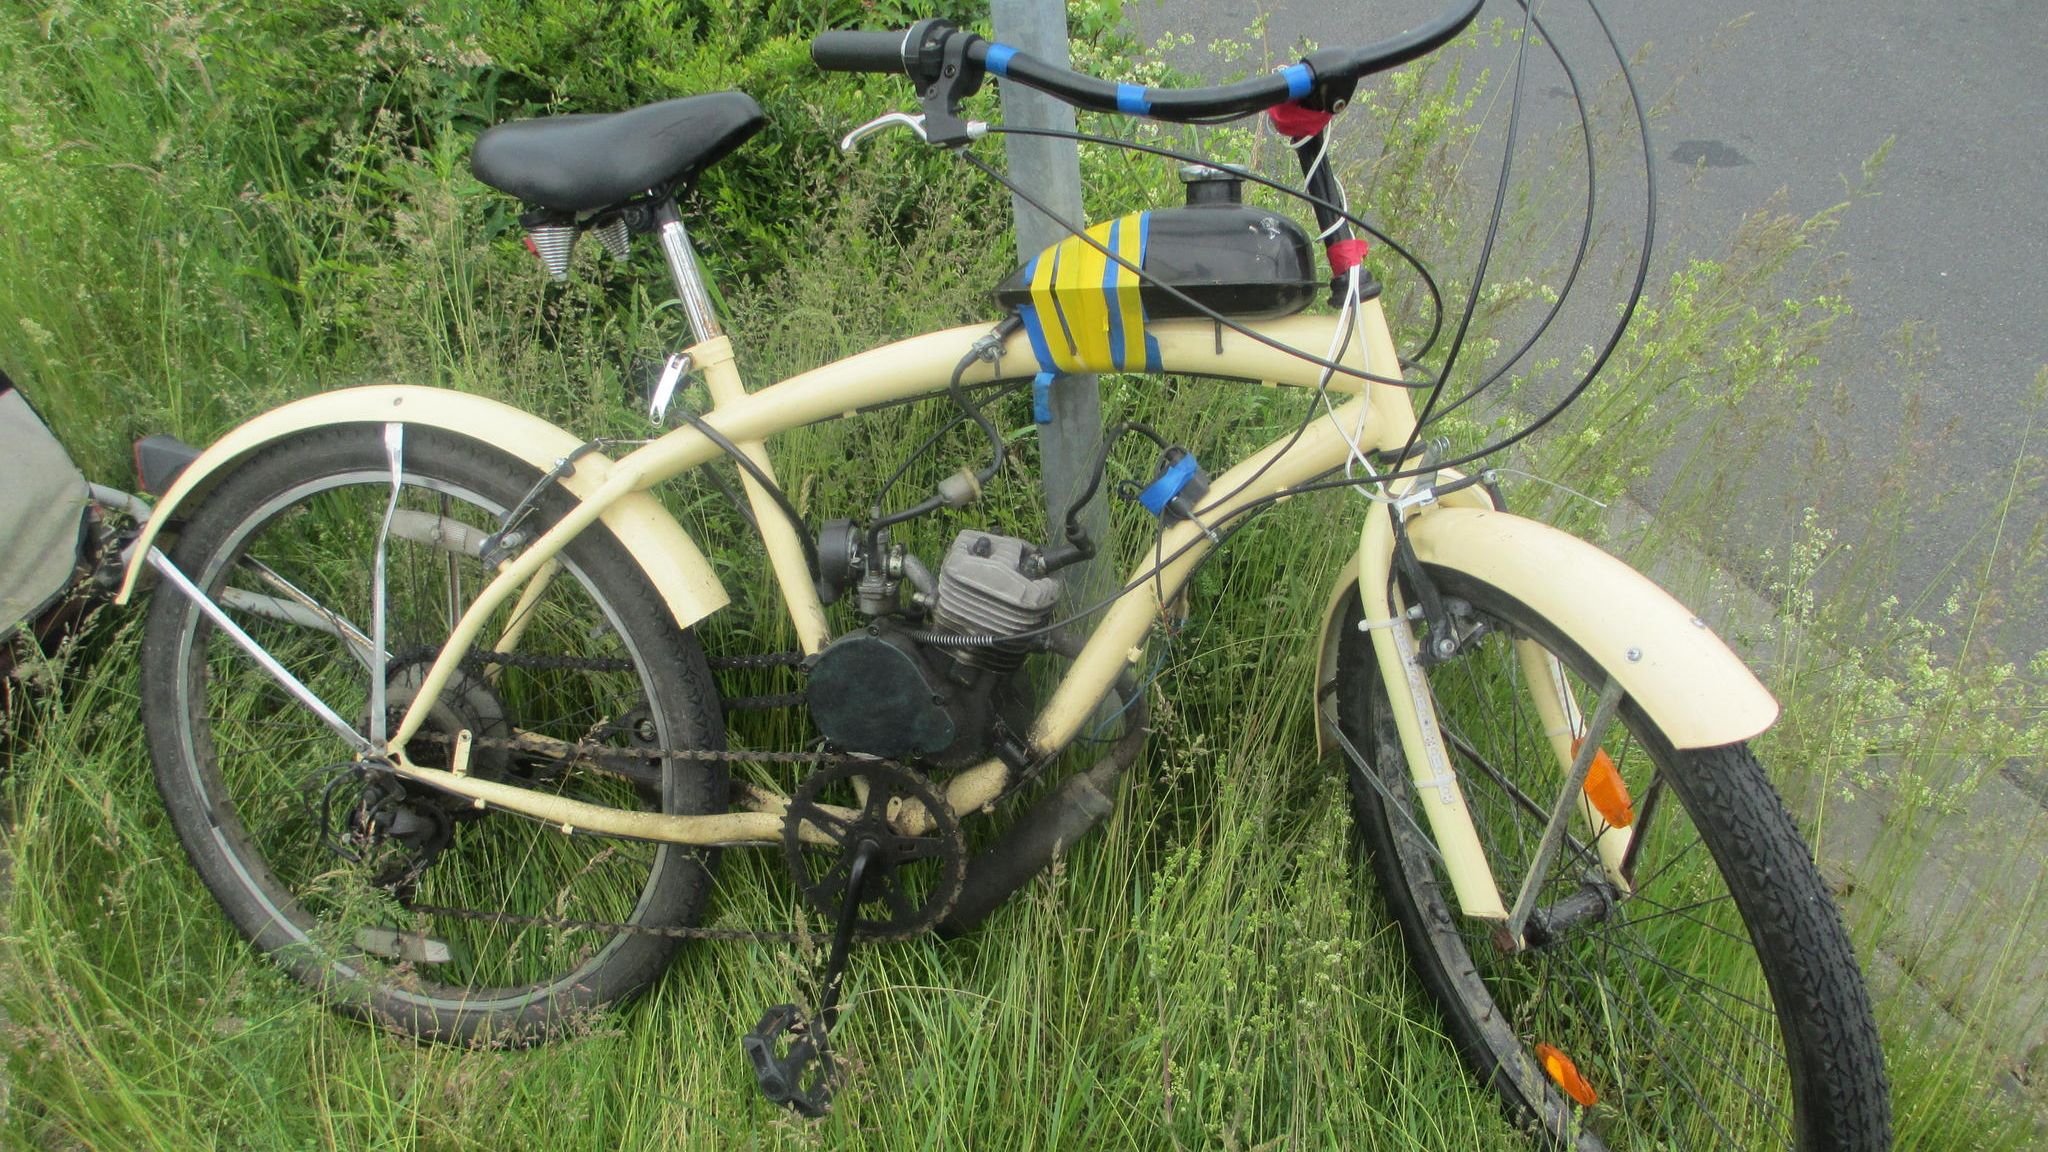 Diebstähle im Landkreis Ebersberg: Ein Fahrrad pro Tag